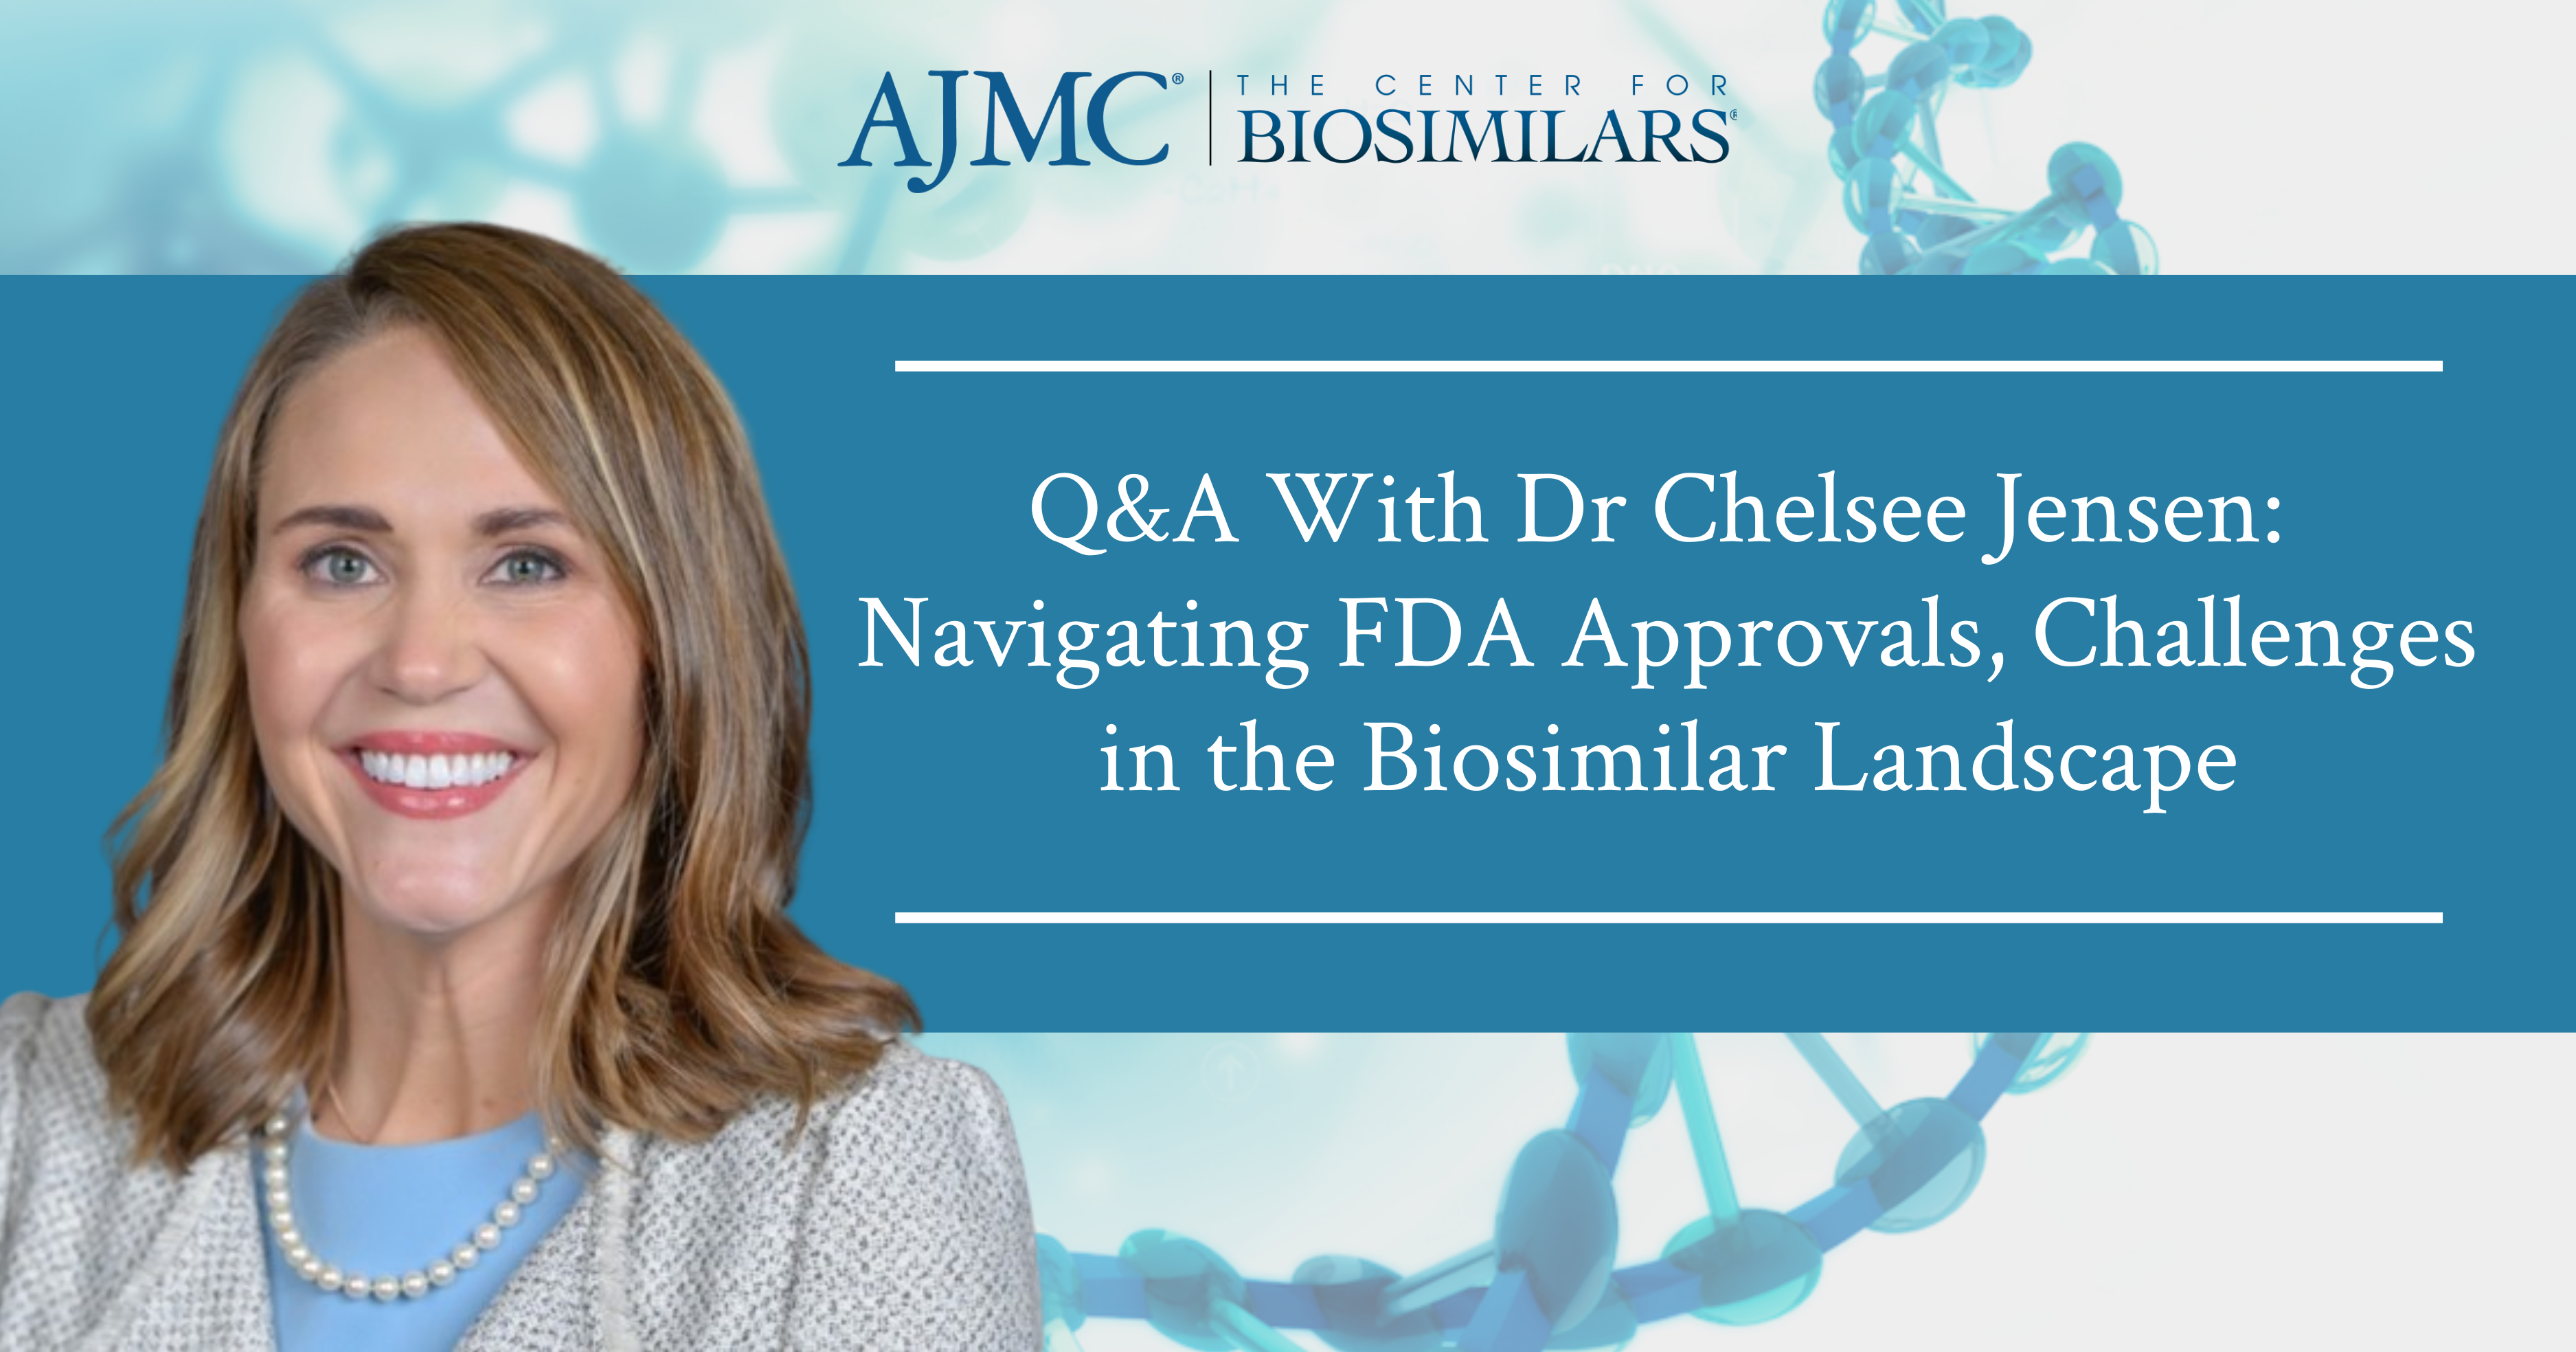 Q&A With Dr Chelsee Jensen: Navigating FDA Approvals, Challenges in the Biosimilar Landscape